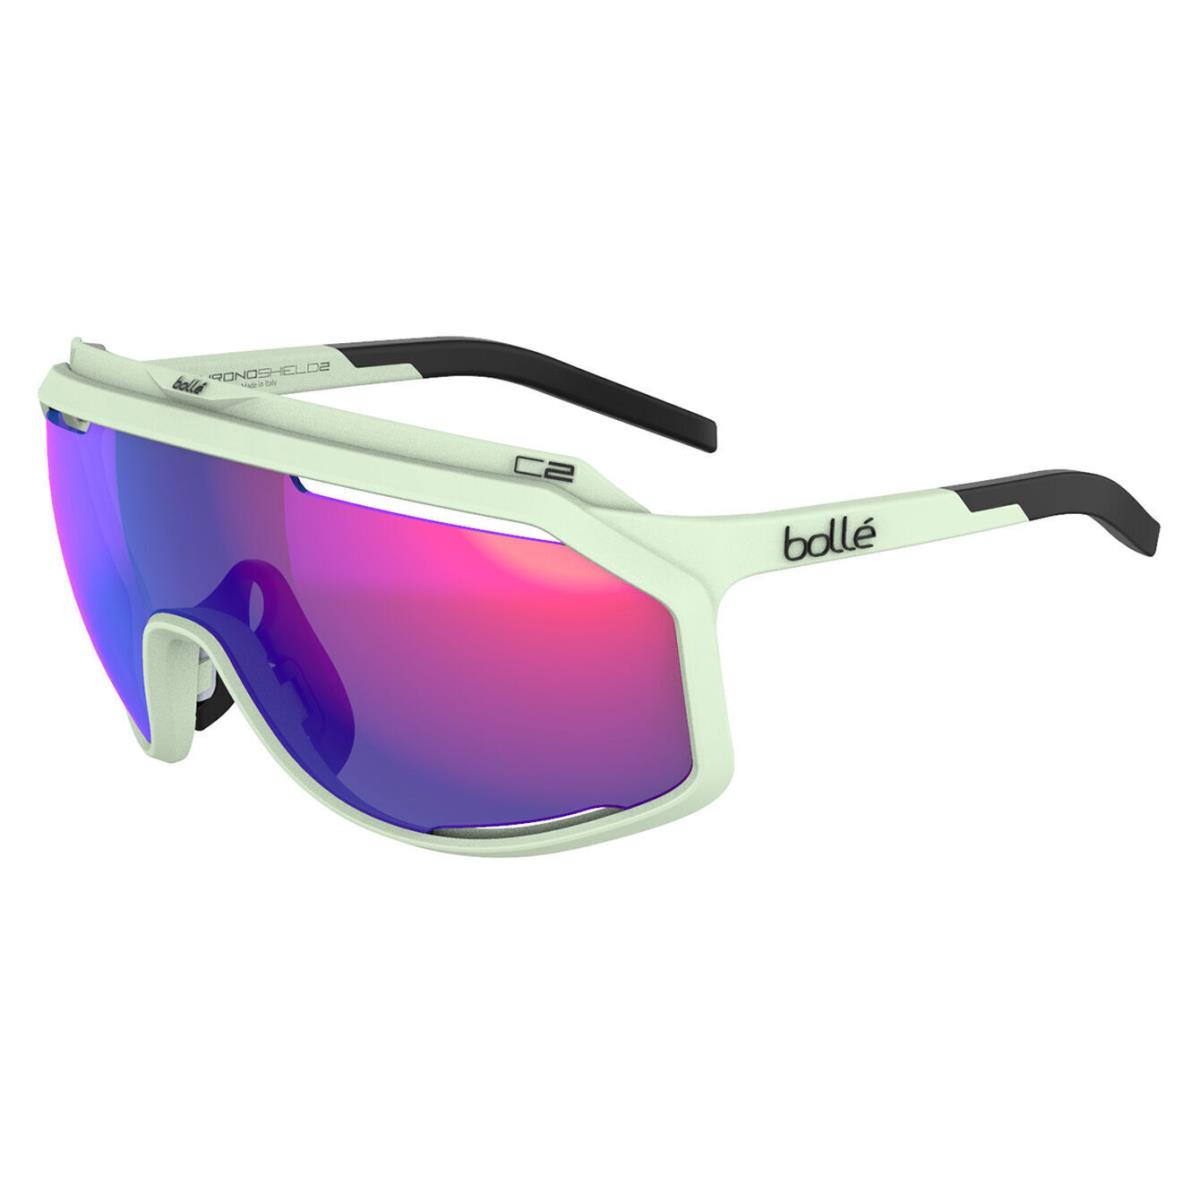 Bolle Chronoshield Polarized Performance Sunglasses